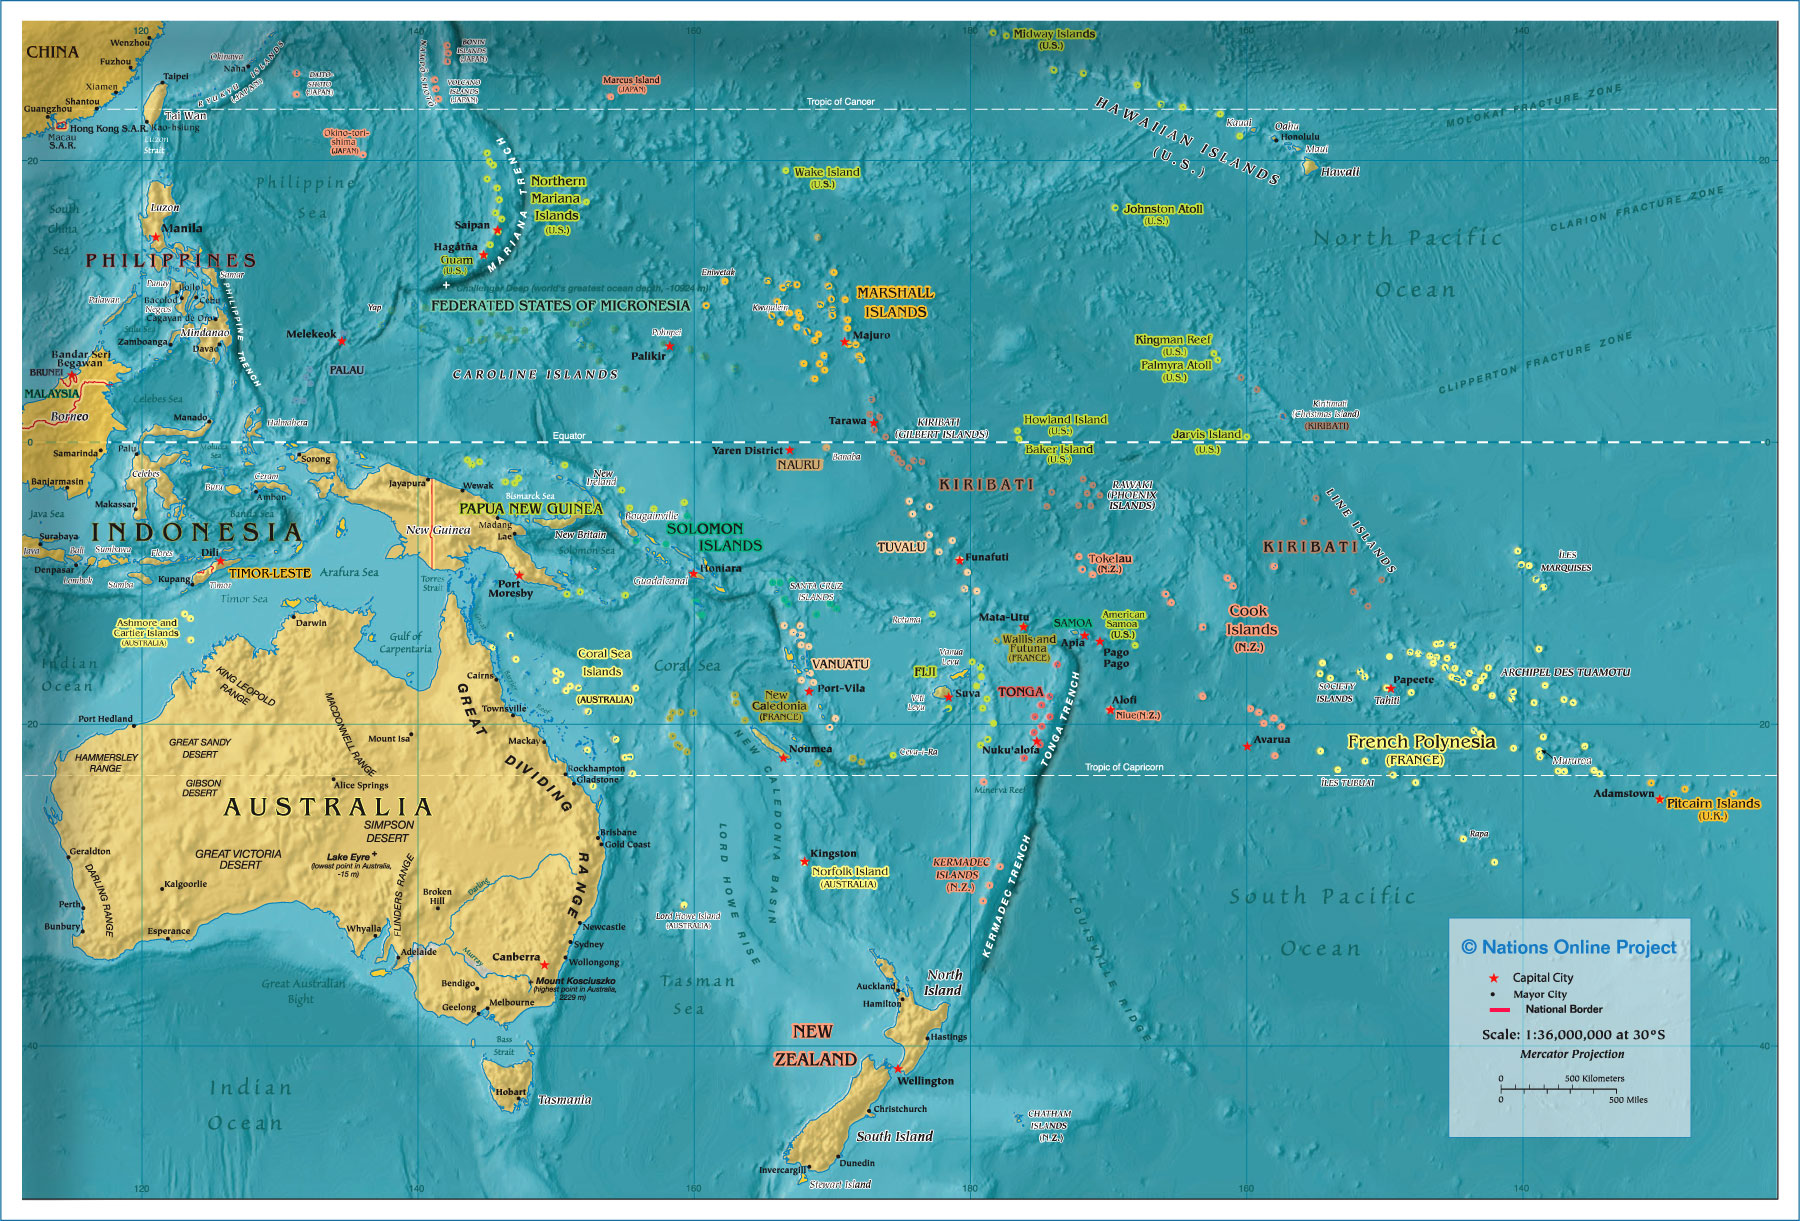 Islands Near Australia Map Political Map of Oceania/Australia   Nations Online Project